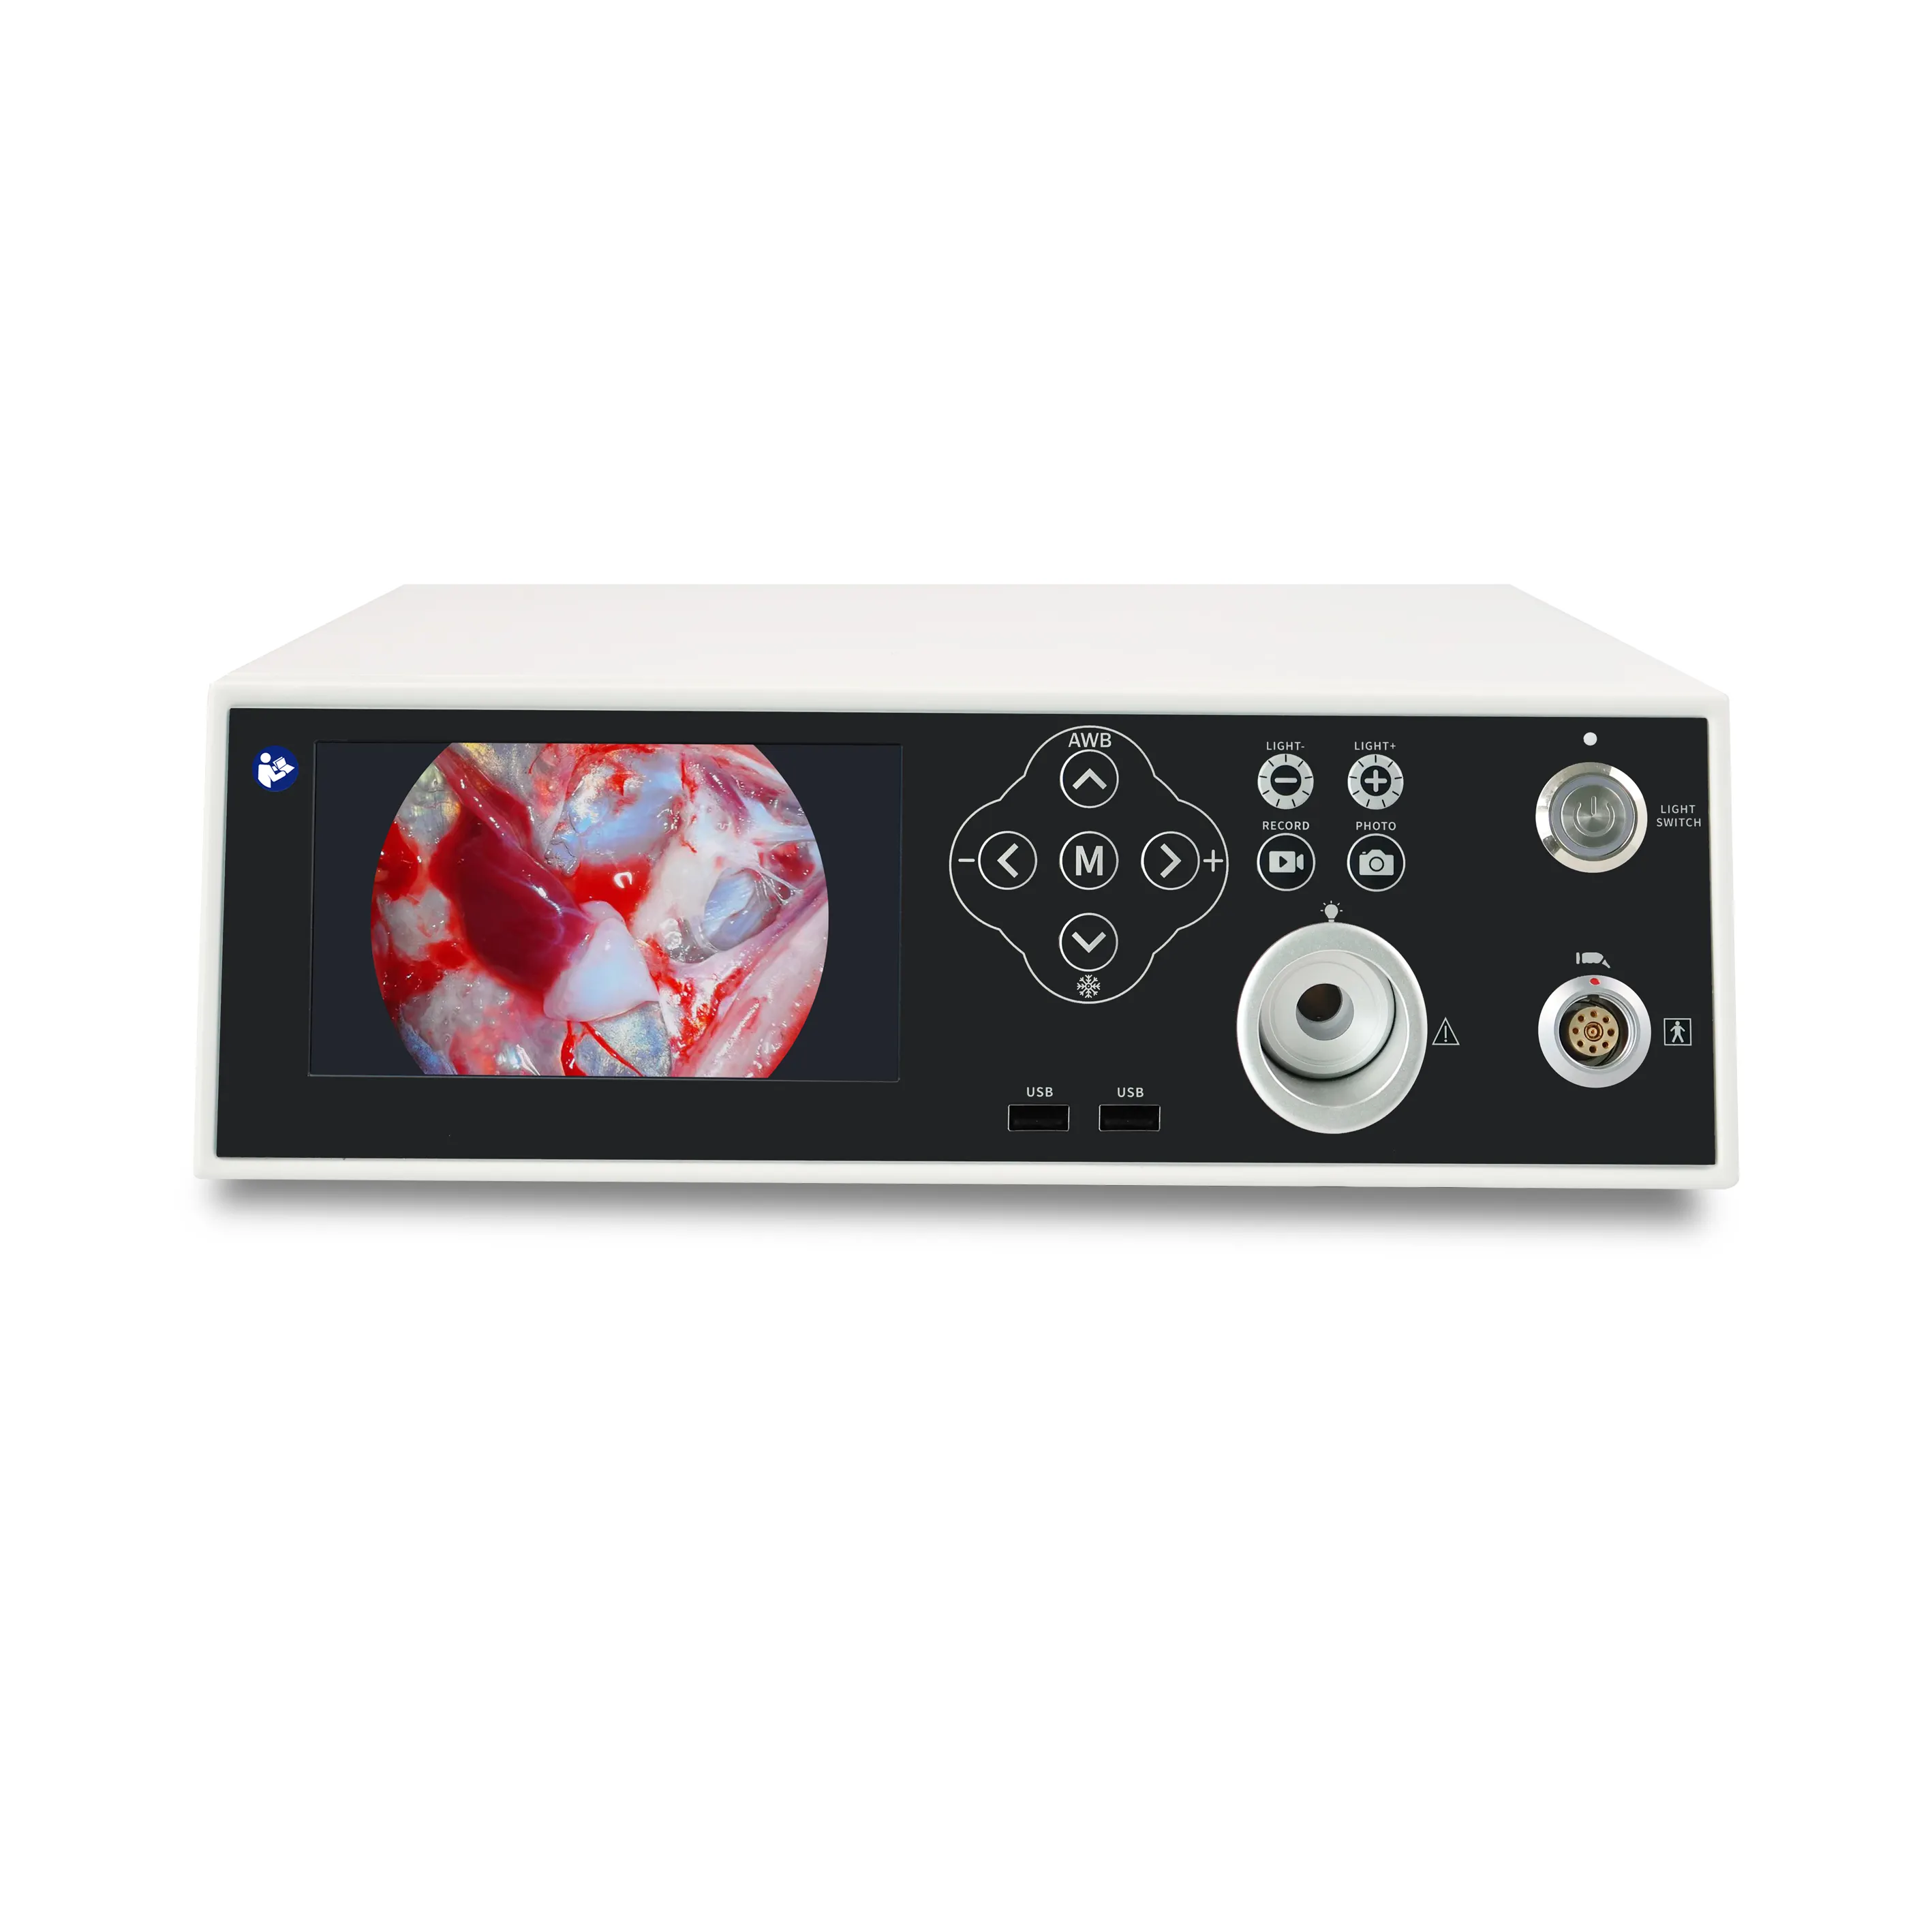 HD 1080P Endoscopio Cámara Sistema de cámara de video para ENT Endoscopio Laparoscopia Urología Cirugía/Inspección